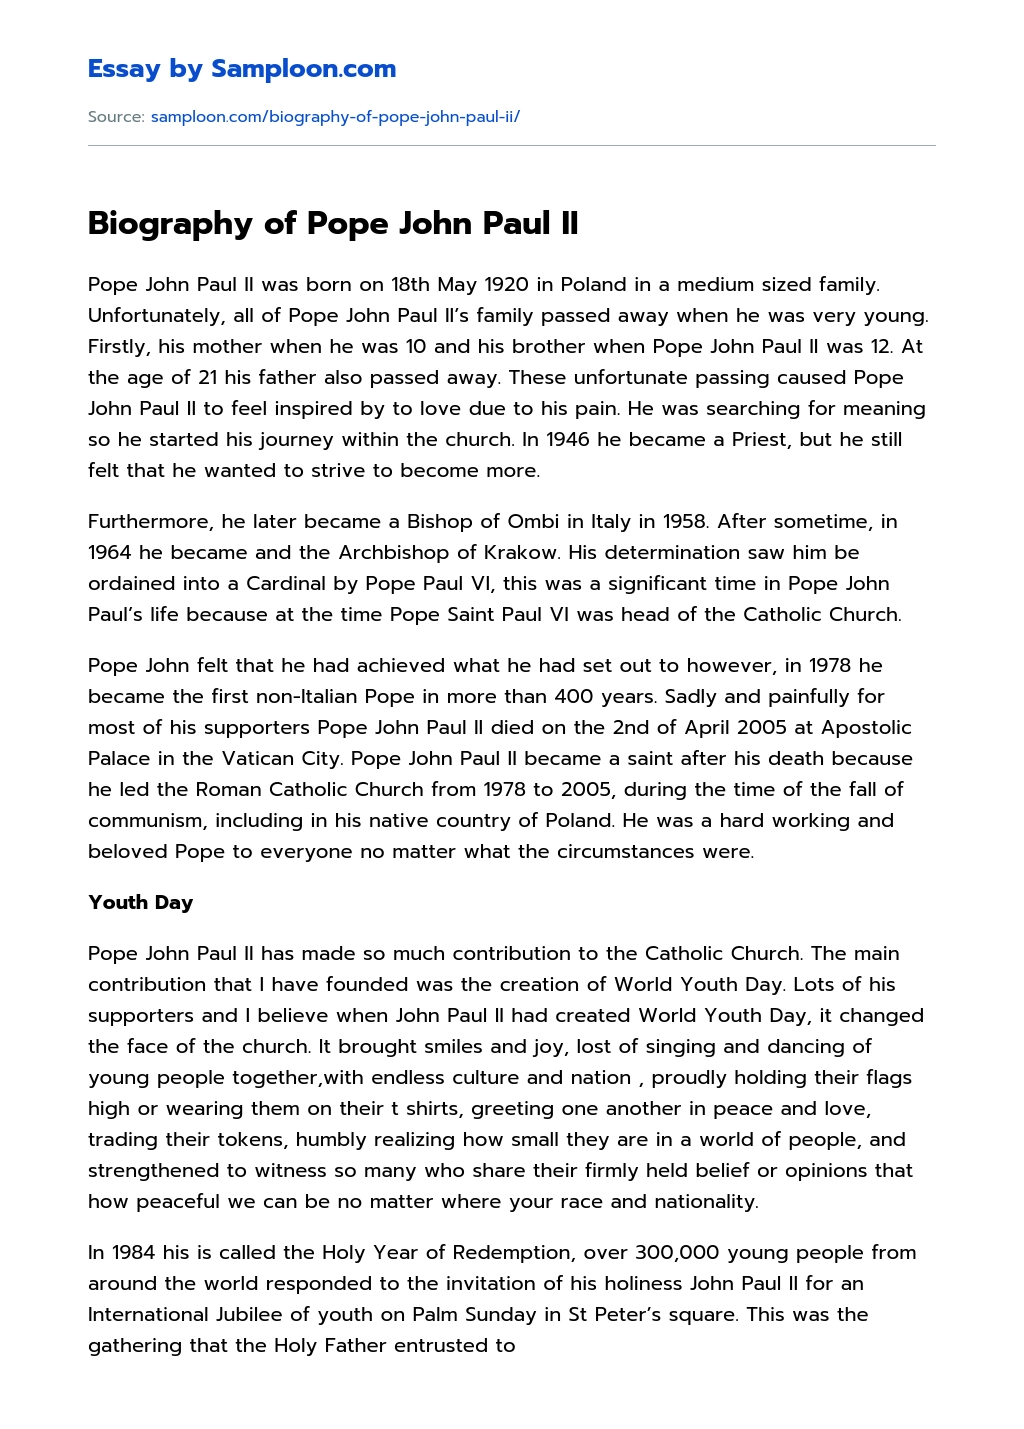 Biography of Pope John Paul II essay